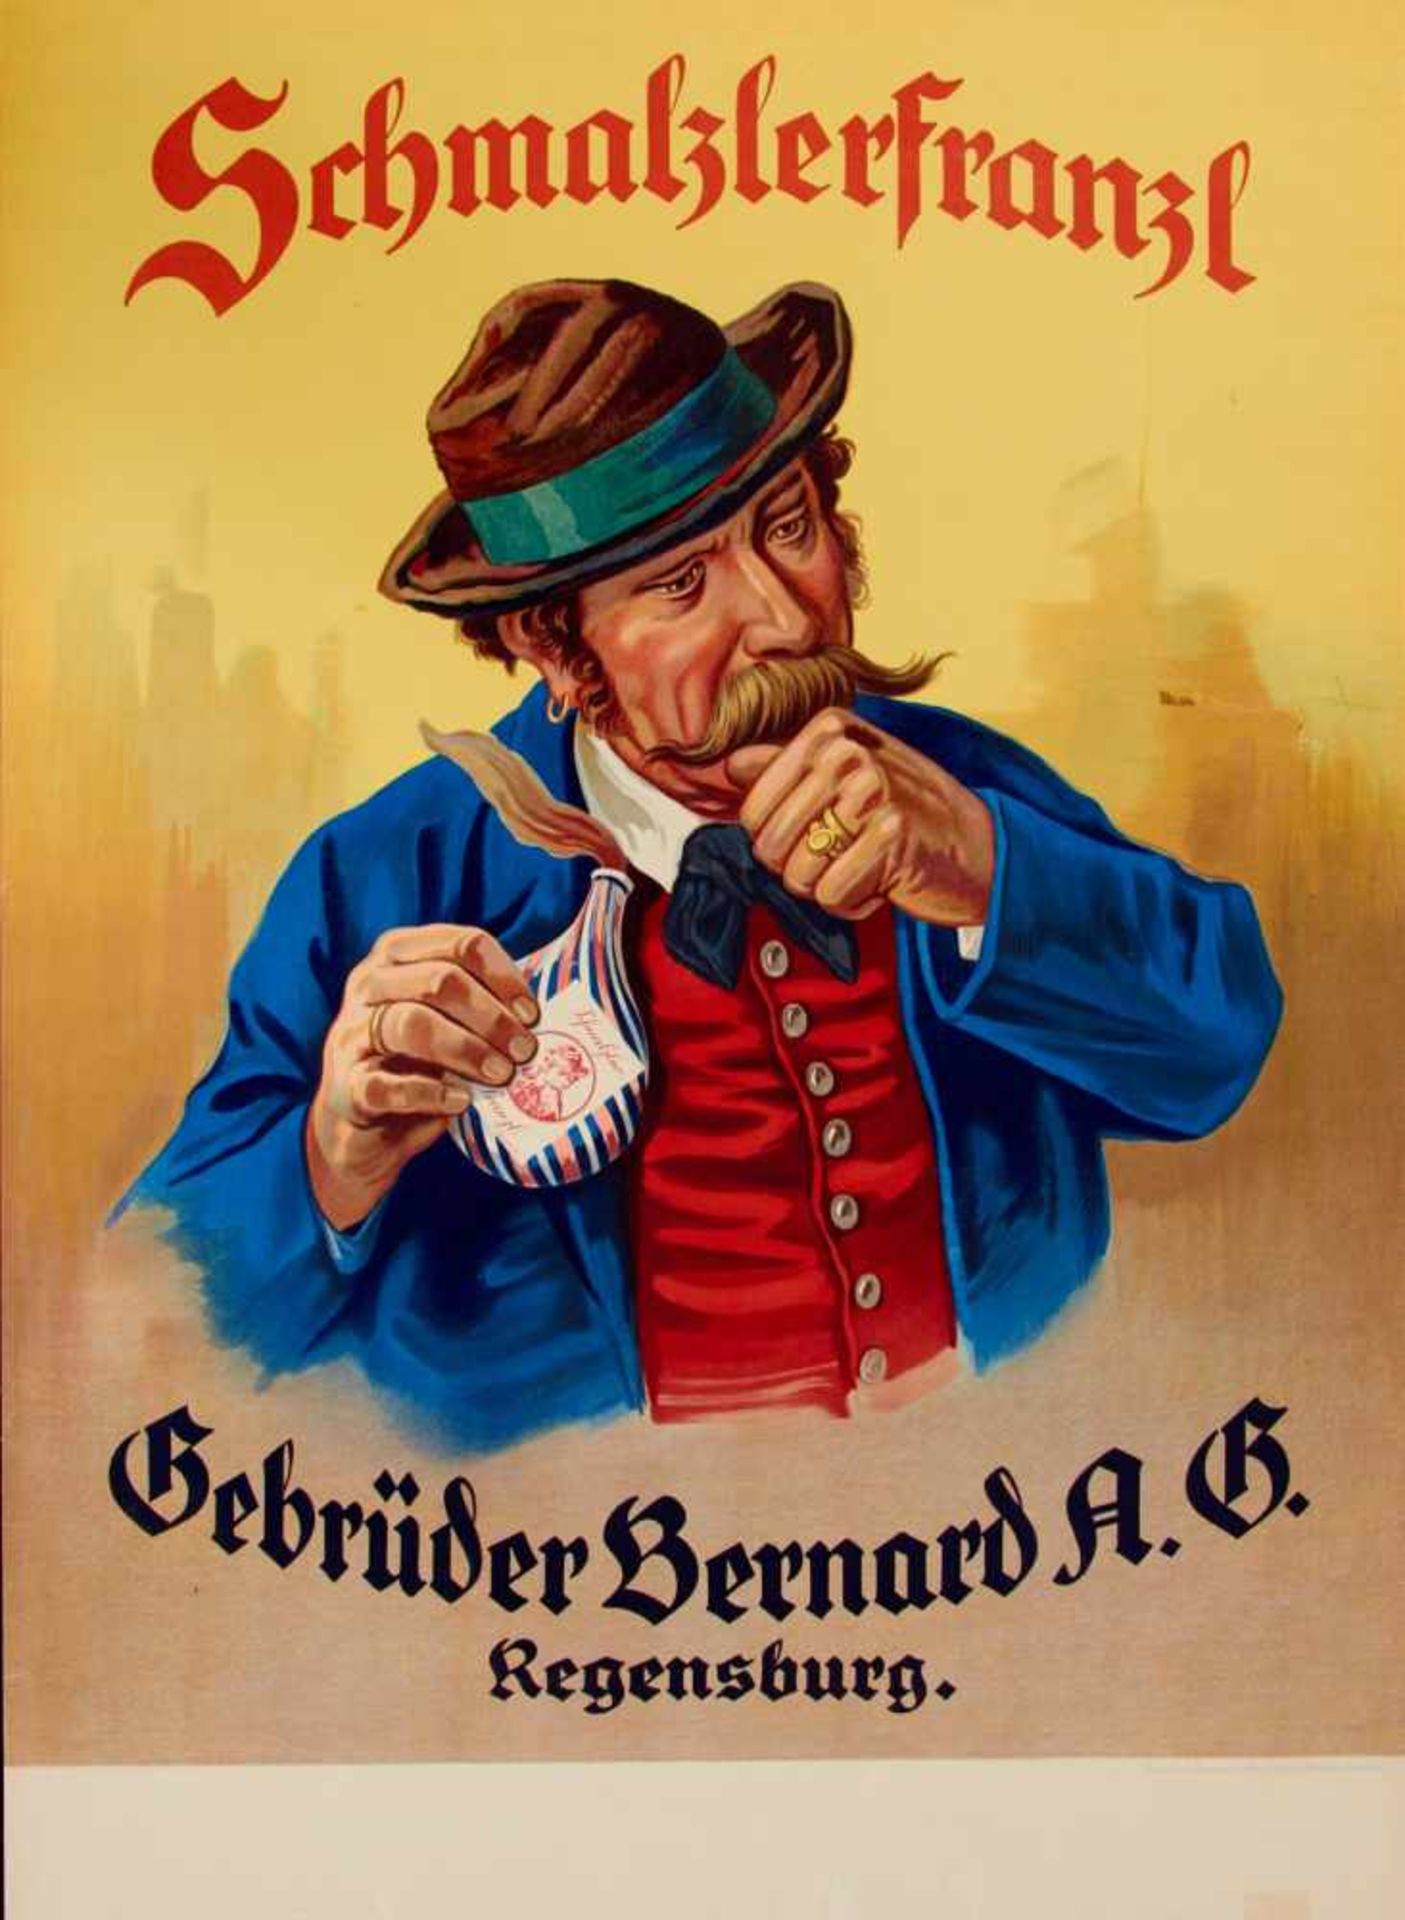 Tabak - Plakat - Bernard - Schmalzlerfranzl.Farb. lithogr. Plakat der Gebrder Bernard A. G. in